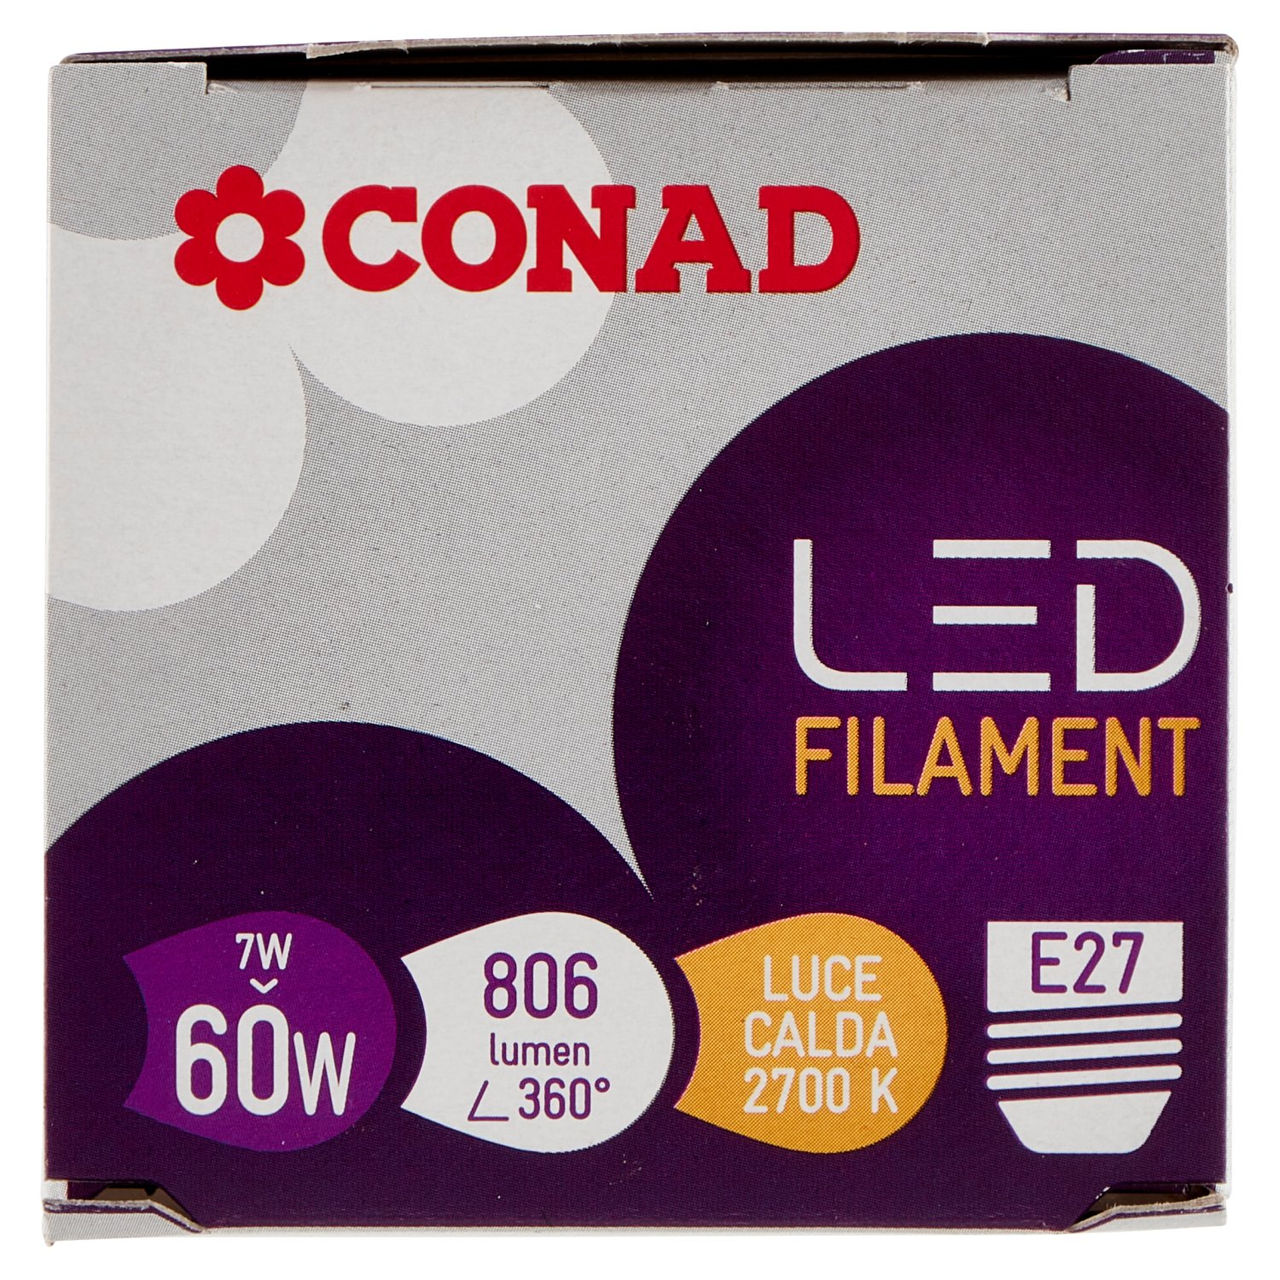 CONAD Led Filament 7W 806 Lumen E27 Luce Calda